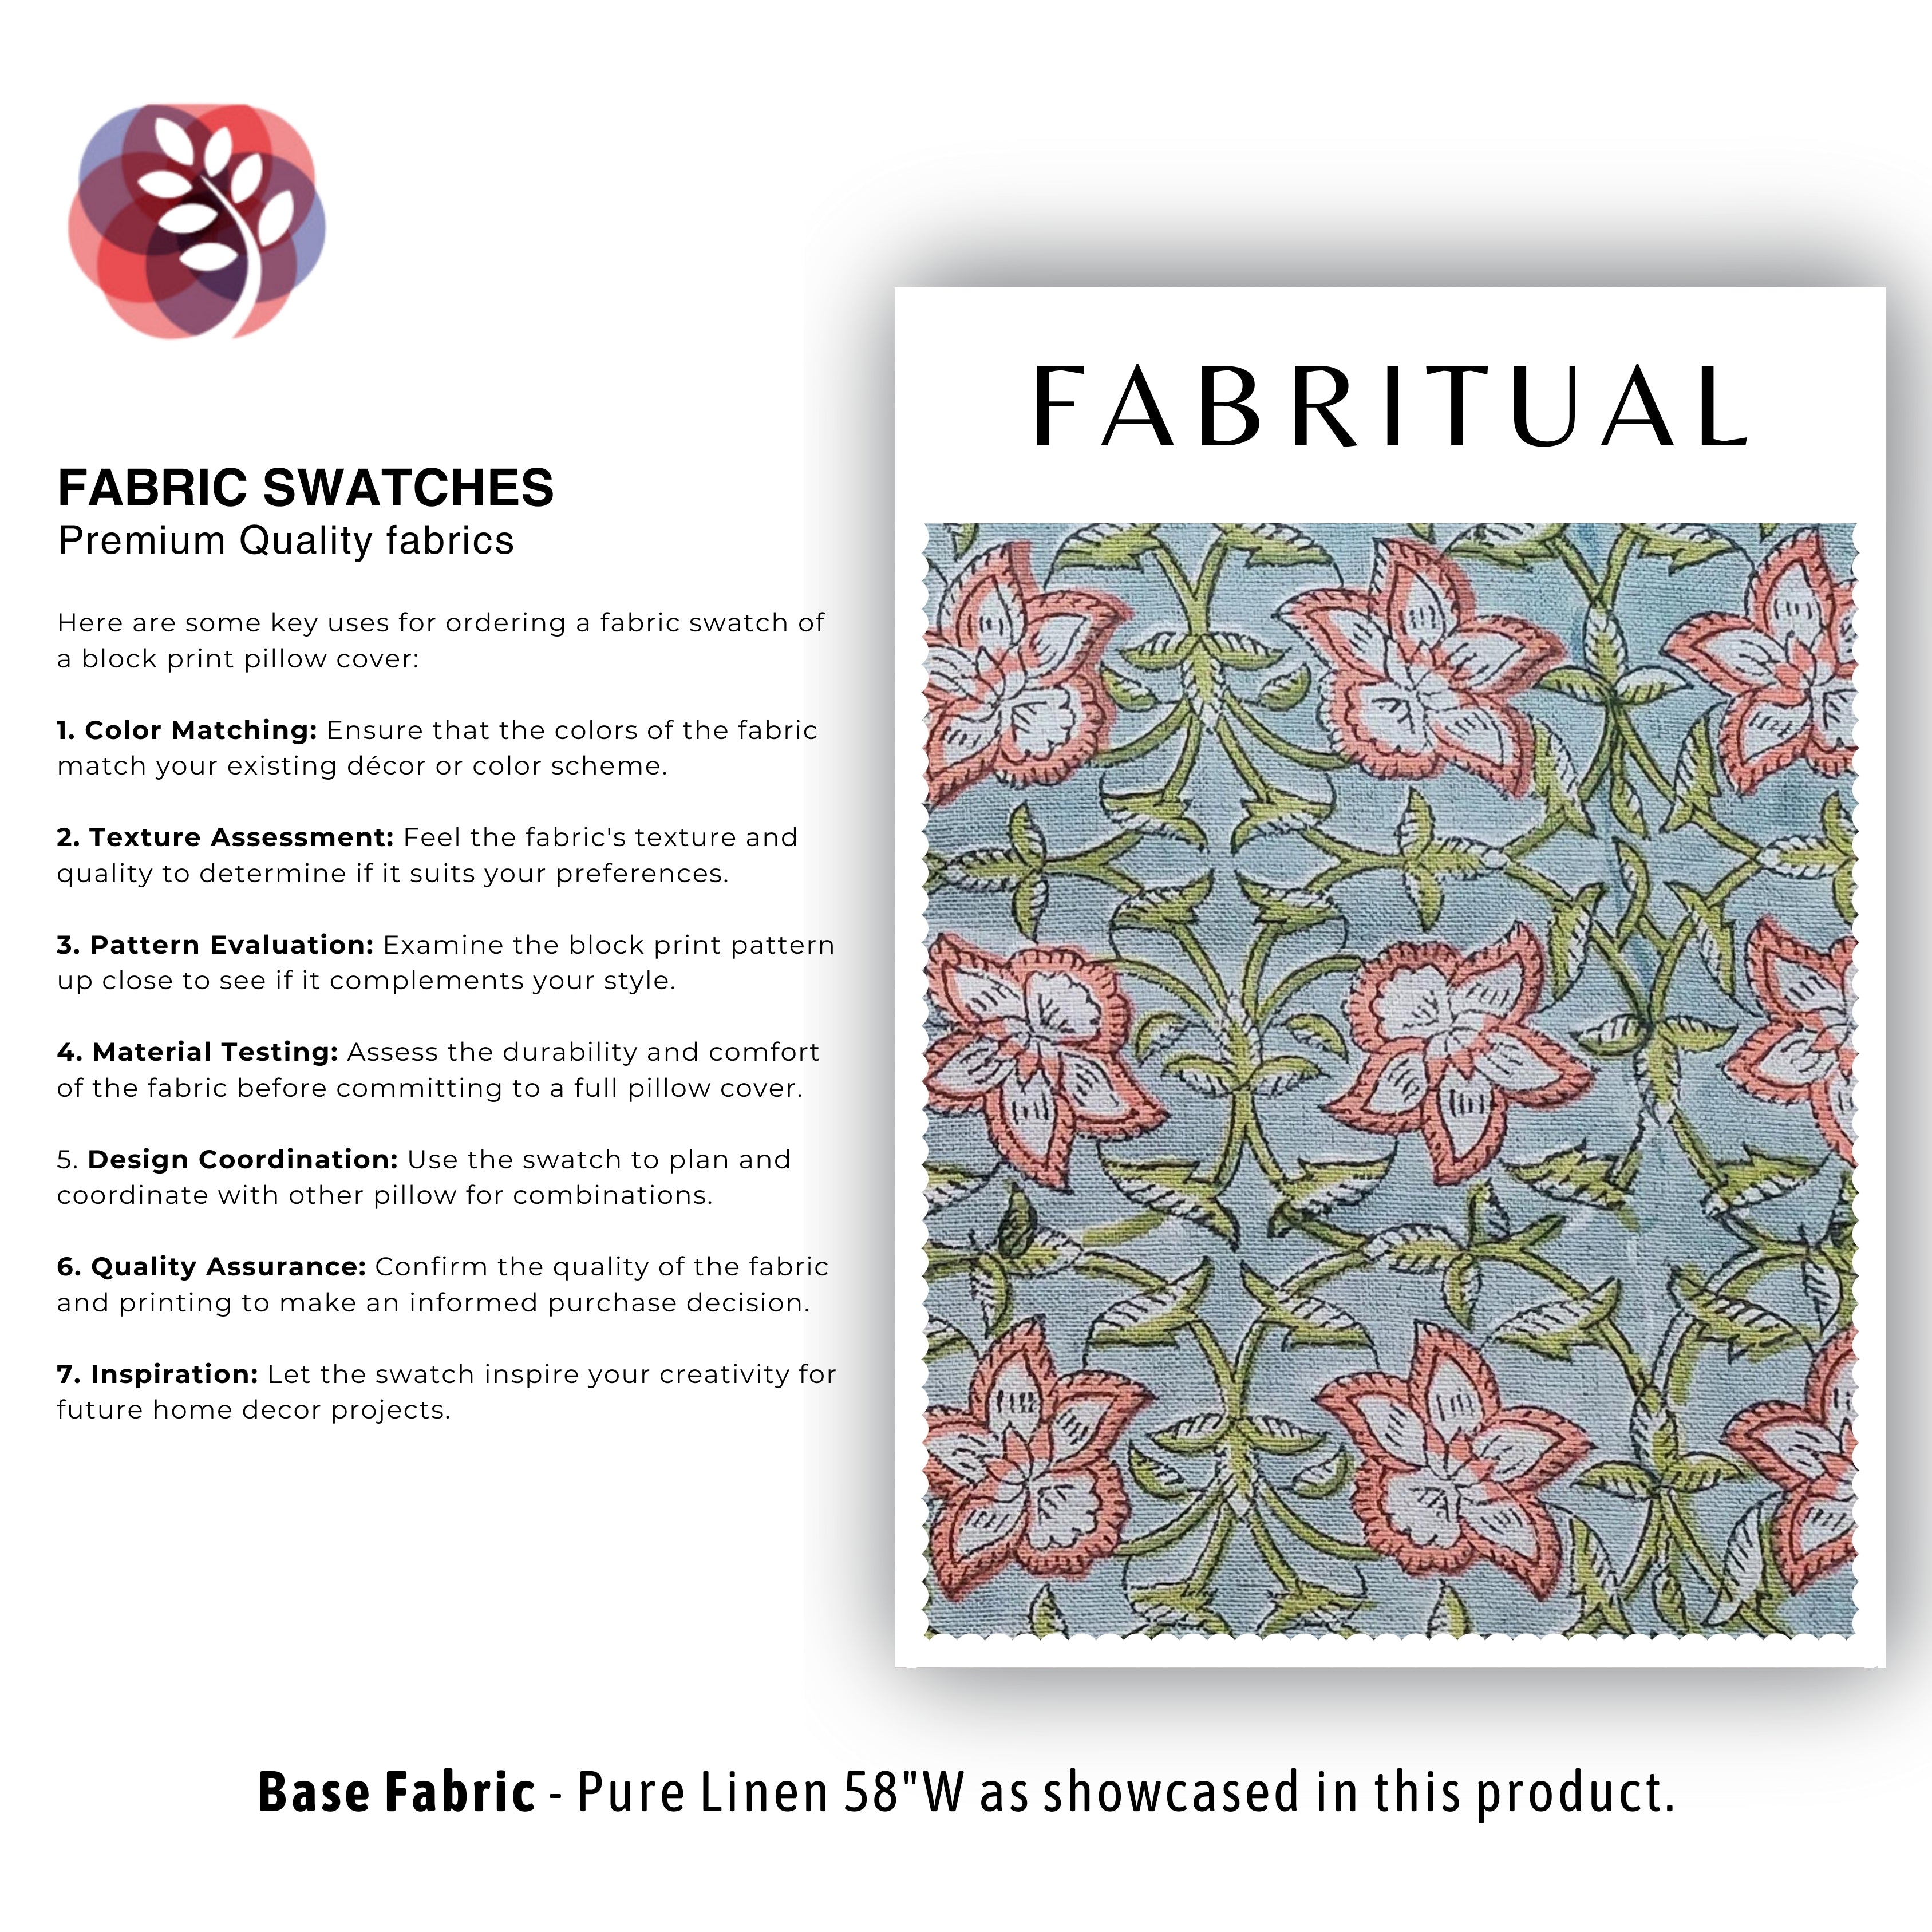 CHUDAMANI, block print linen fabric, Indian print, fabric by yard, sewing fabric, pure linen, floral fabric linen fabric